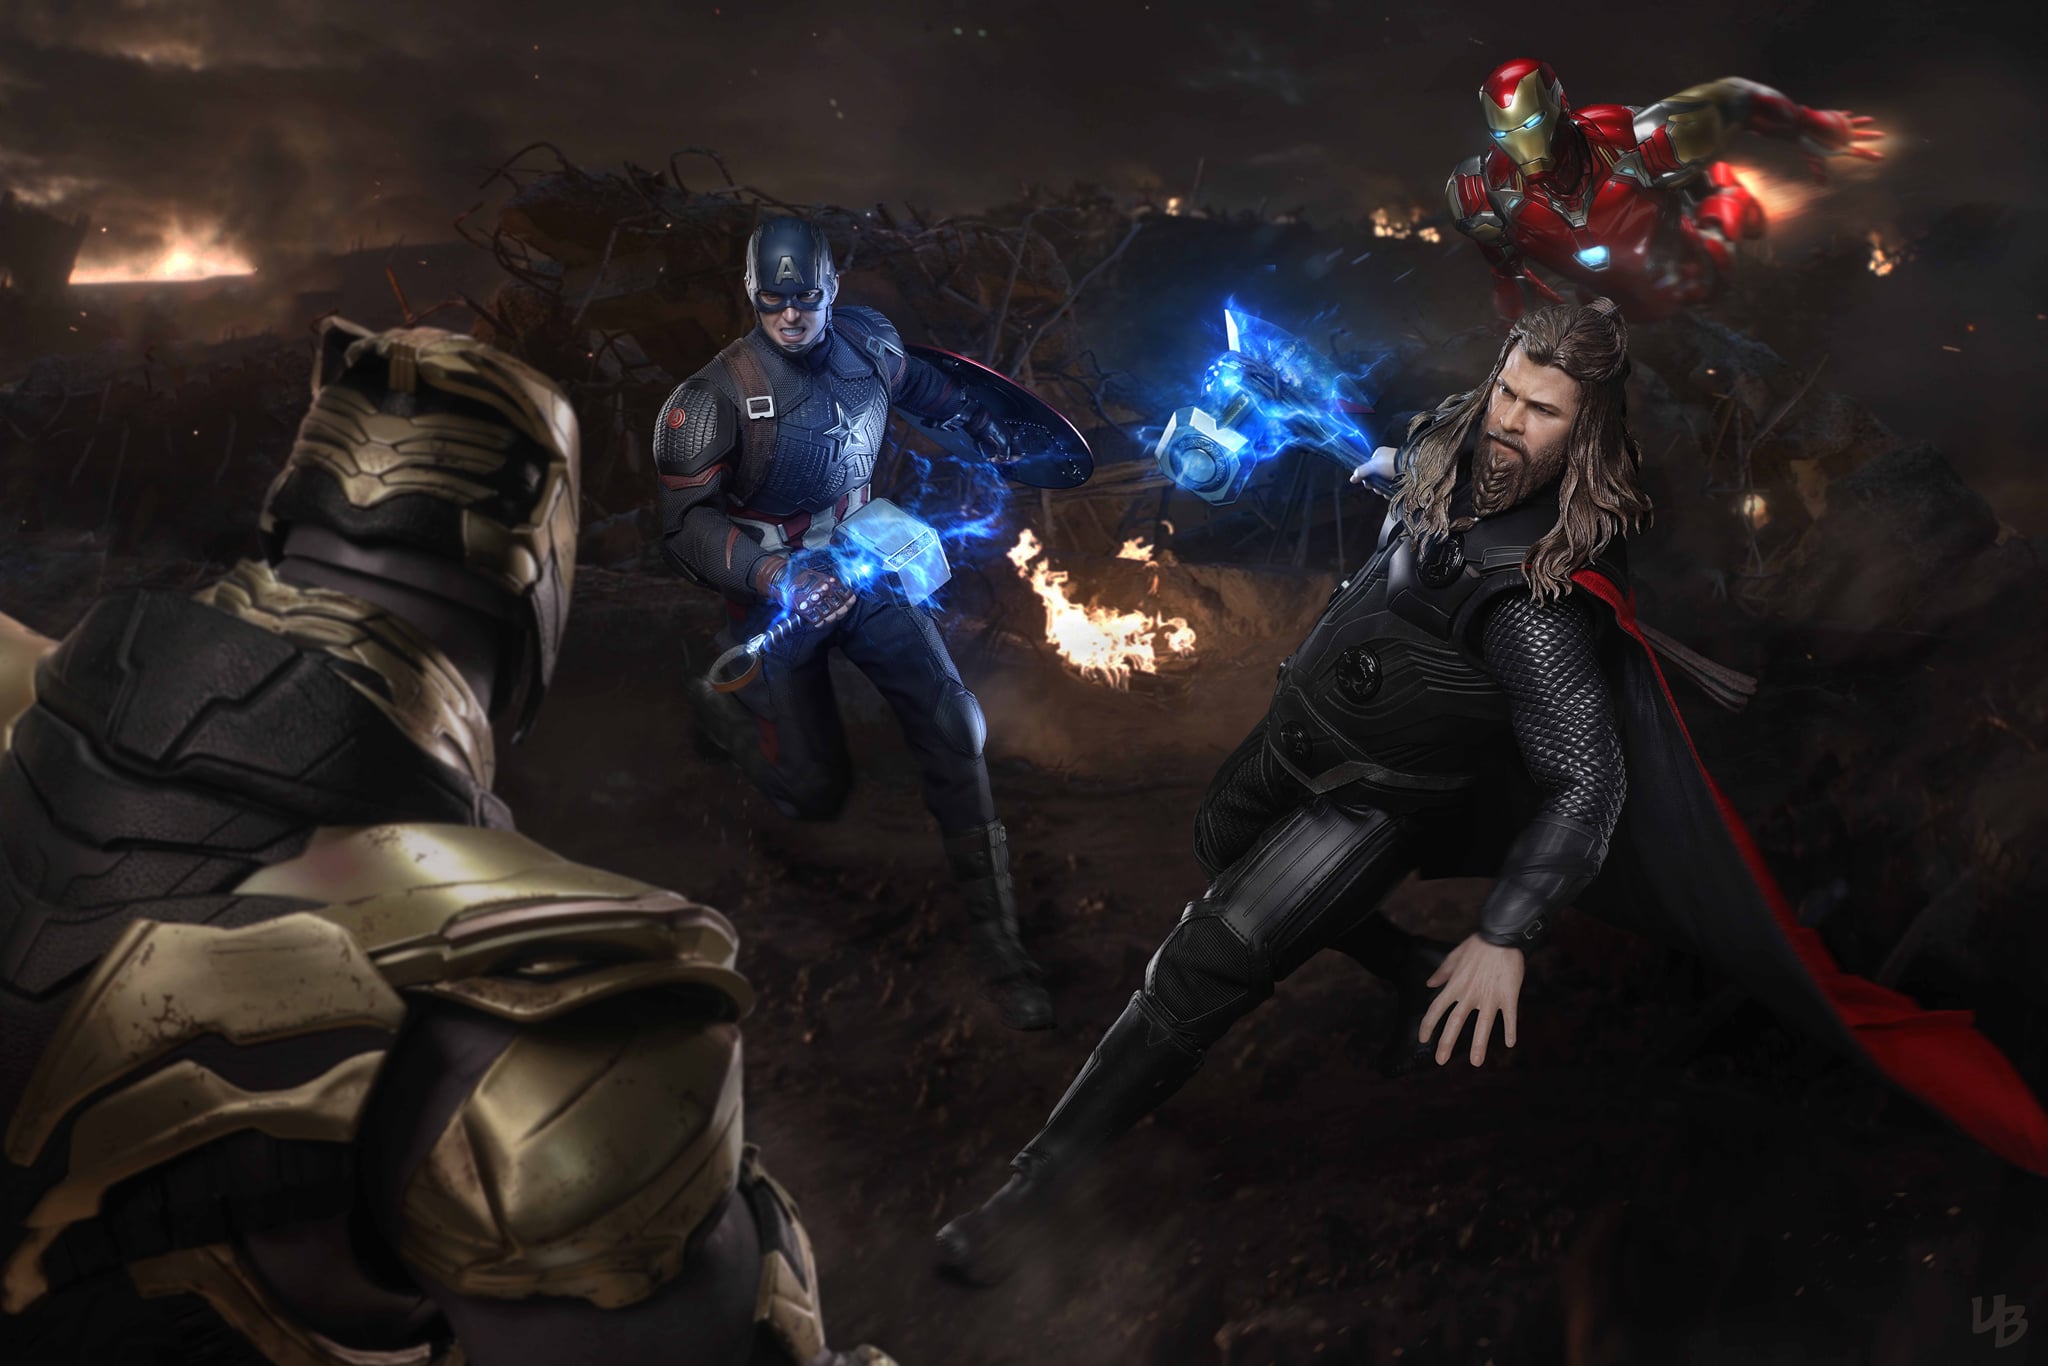 HD desktop wallpaper: Iron Man, Captain America, Movie, Thor, The Avengers,  Thanos, Avengers Endgame download free picture #503974